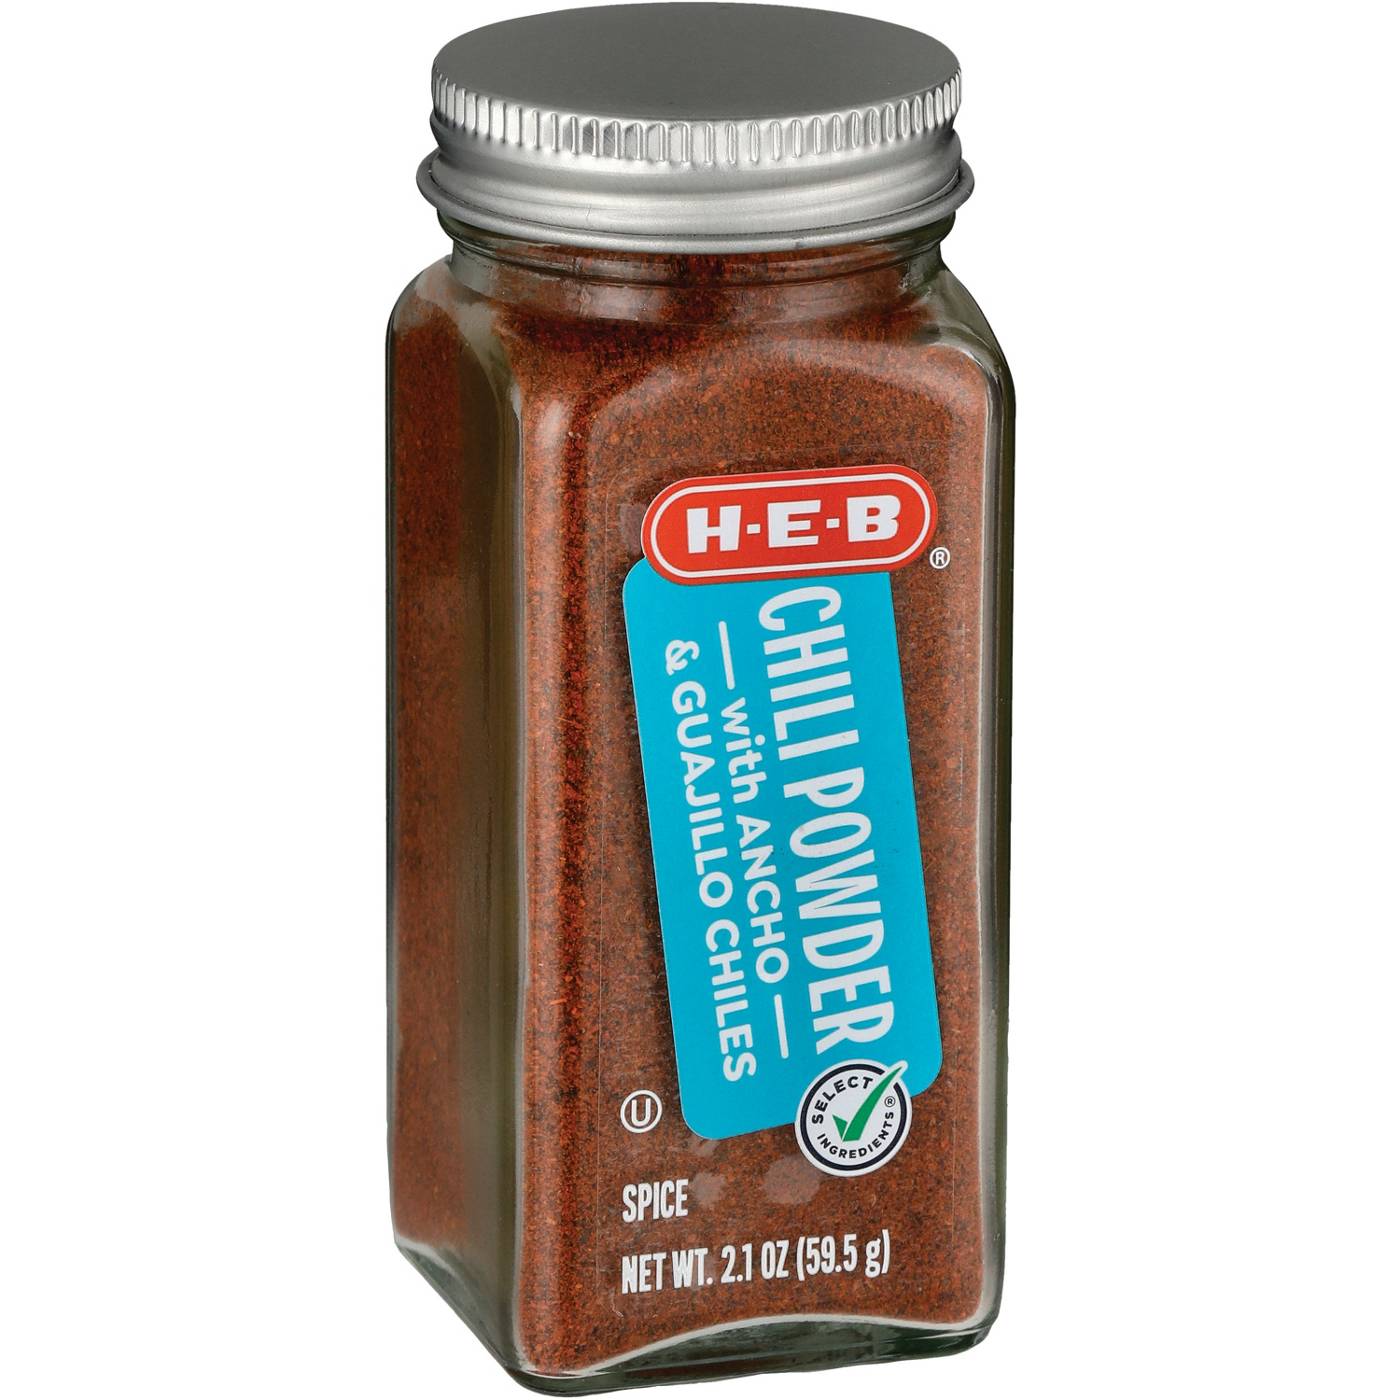 H-E-B Chili Powder; image 2 of 2